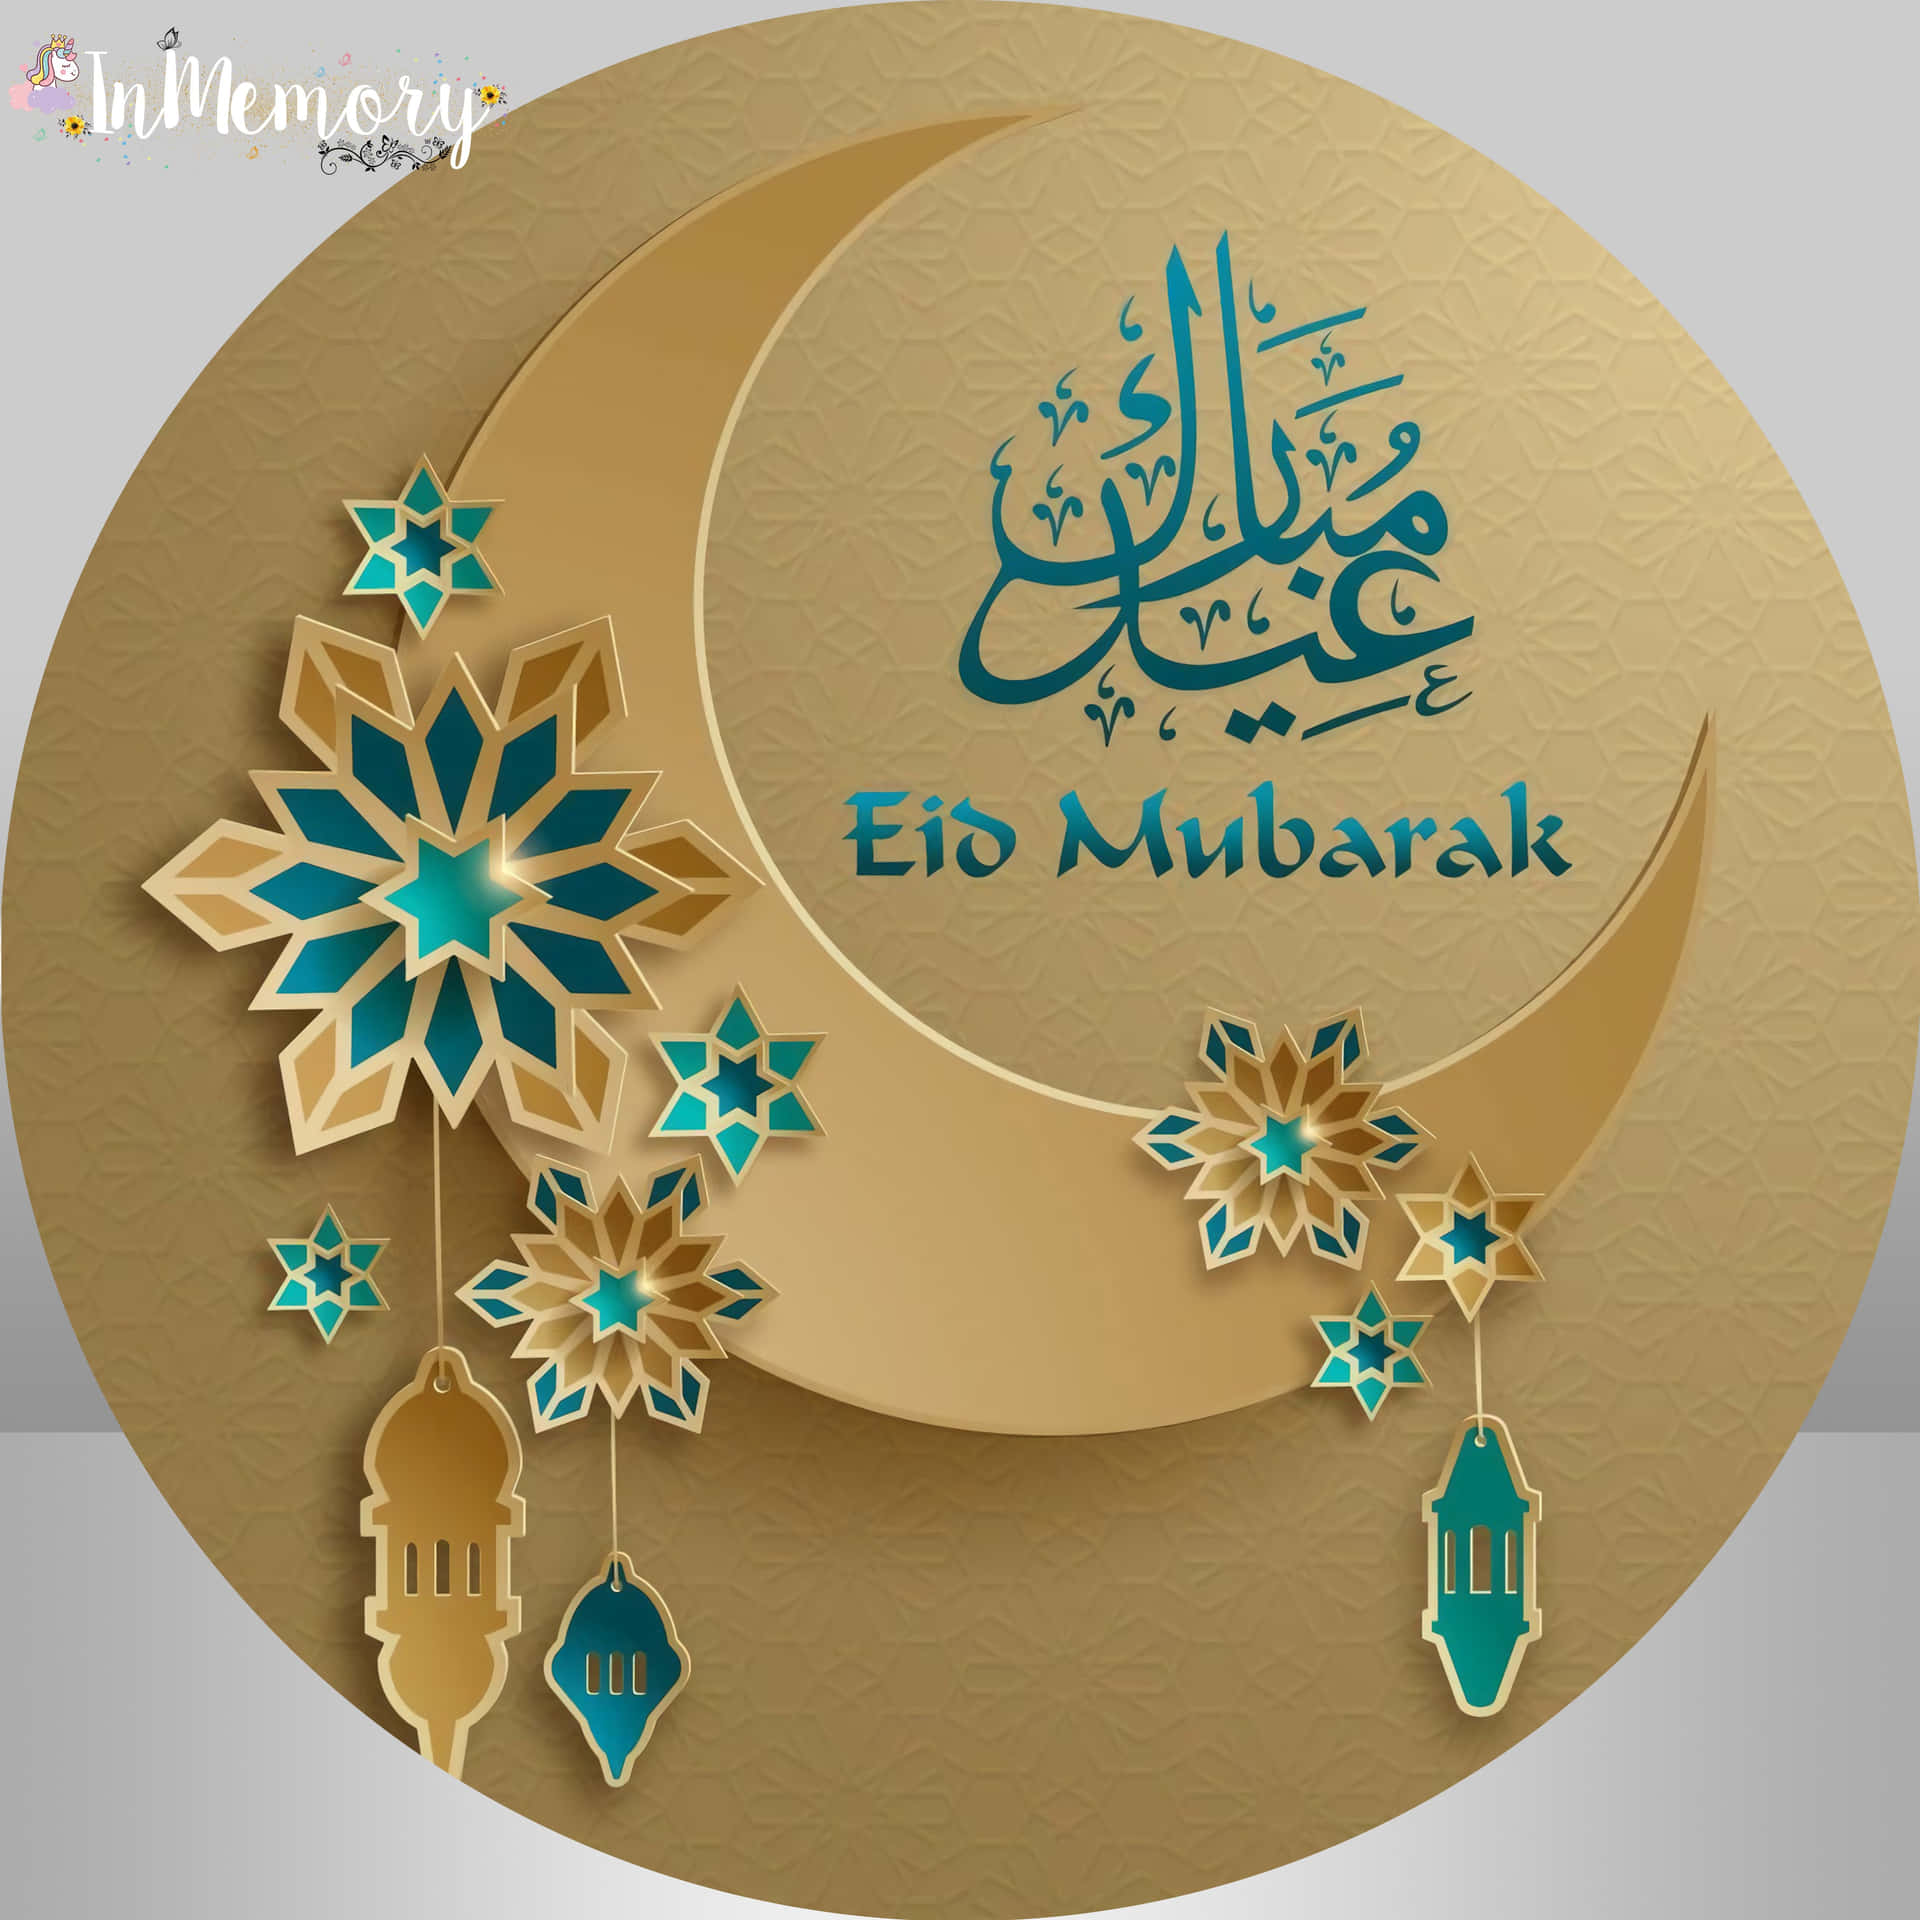 Wishing all a happy Eid Mubarak